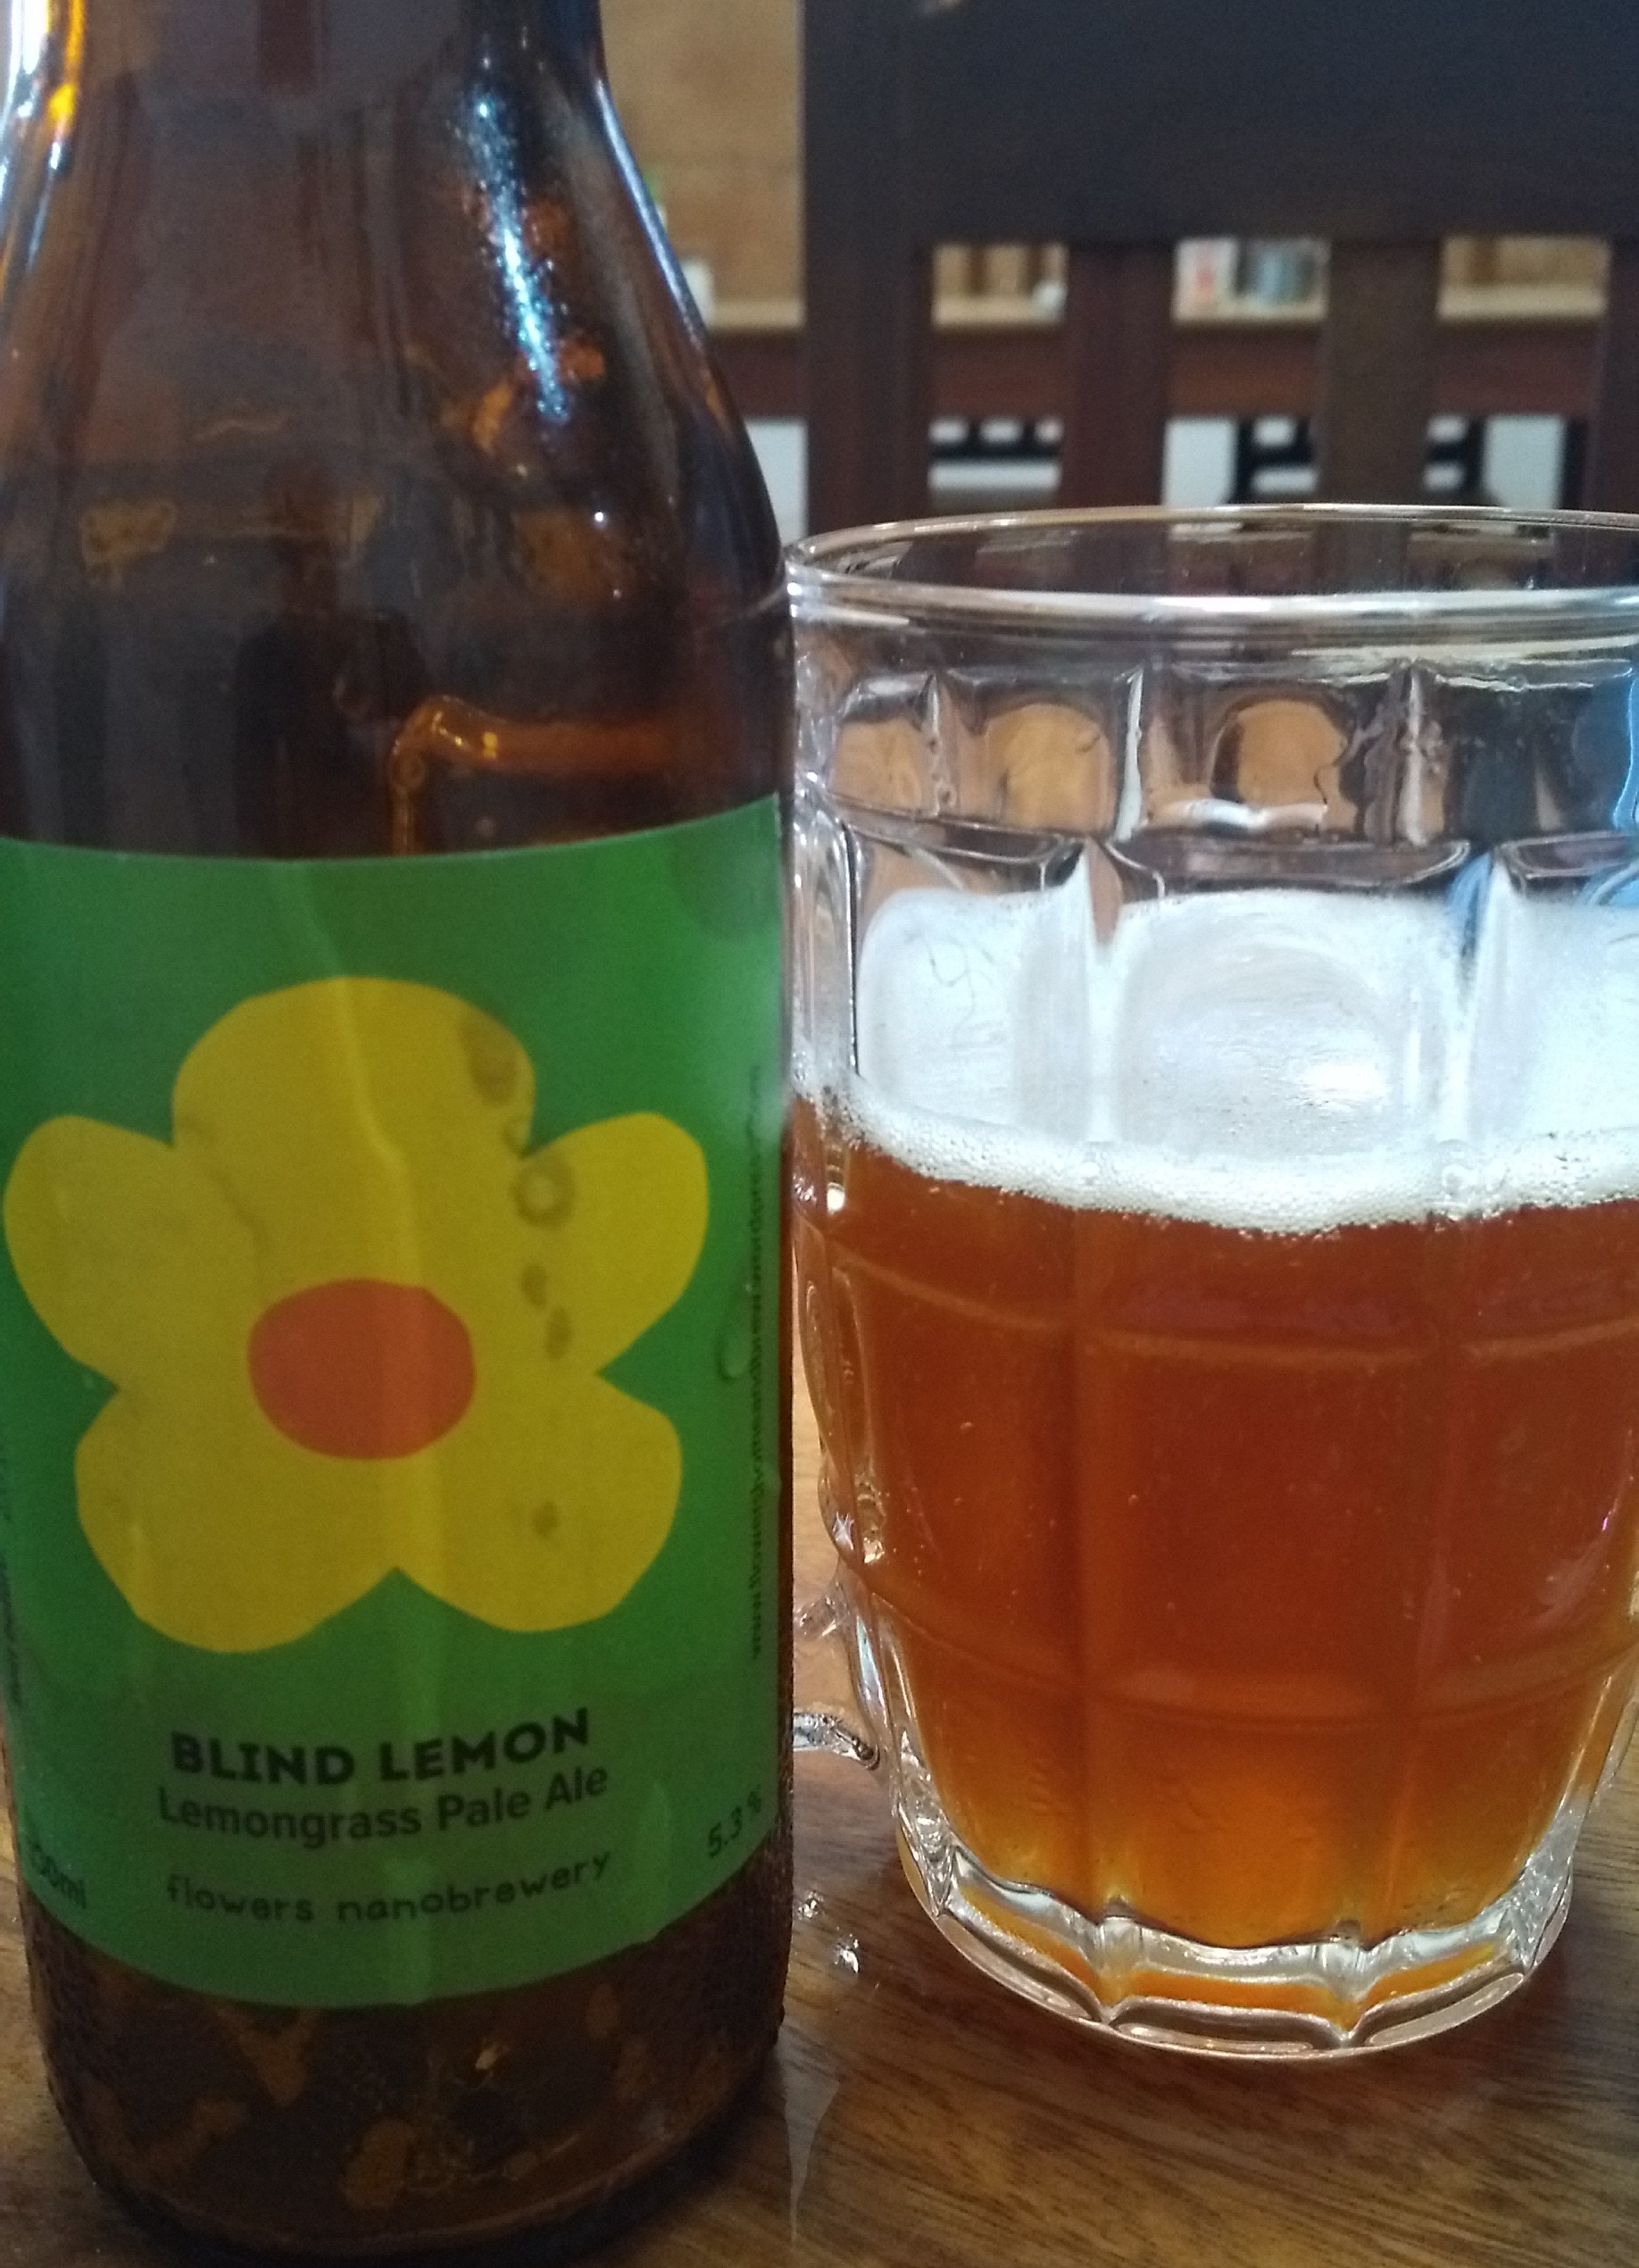 Blind Lemon Lemongrass Pale Ale Cambodian Craft Beer Review